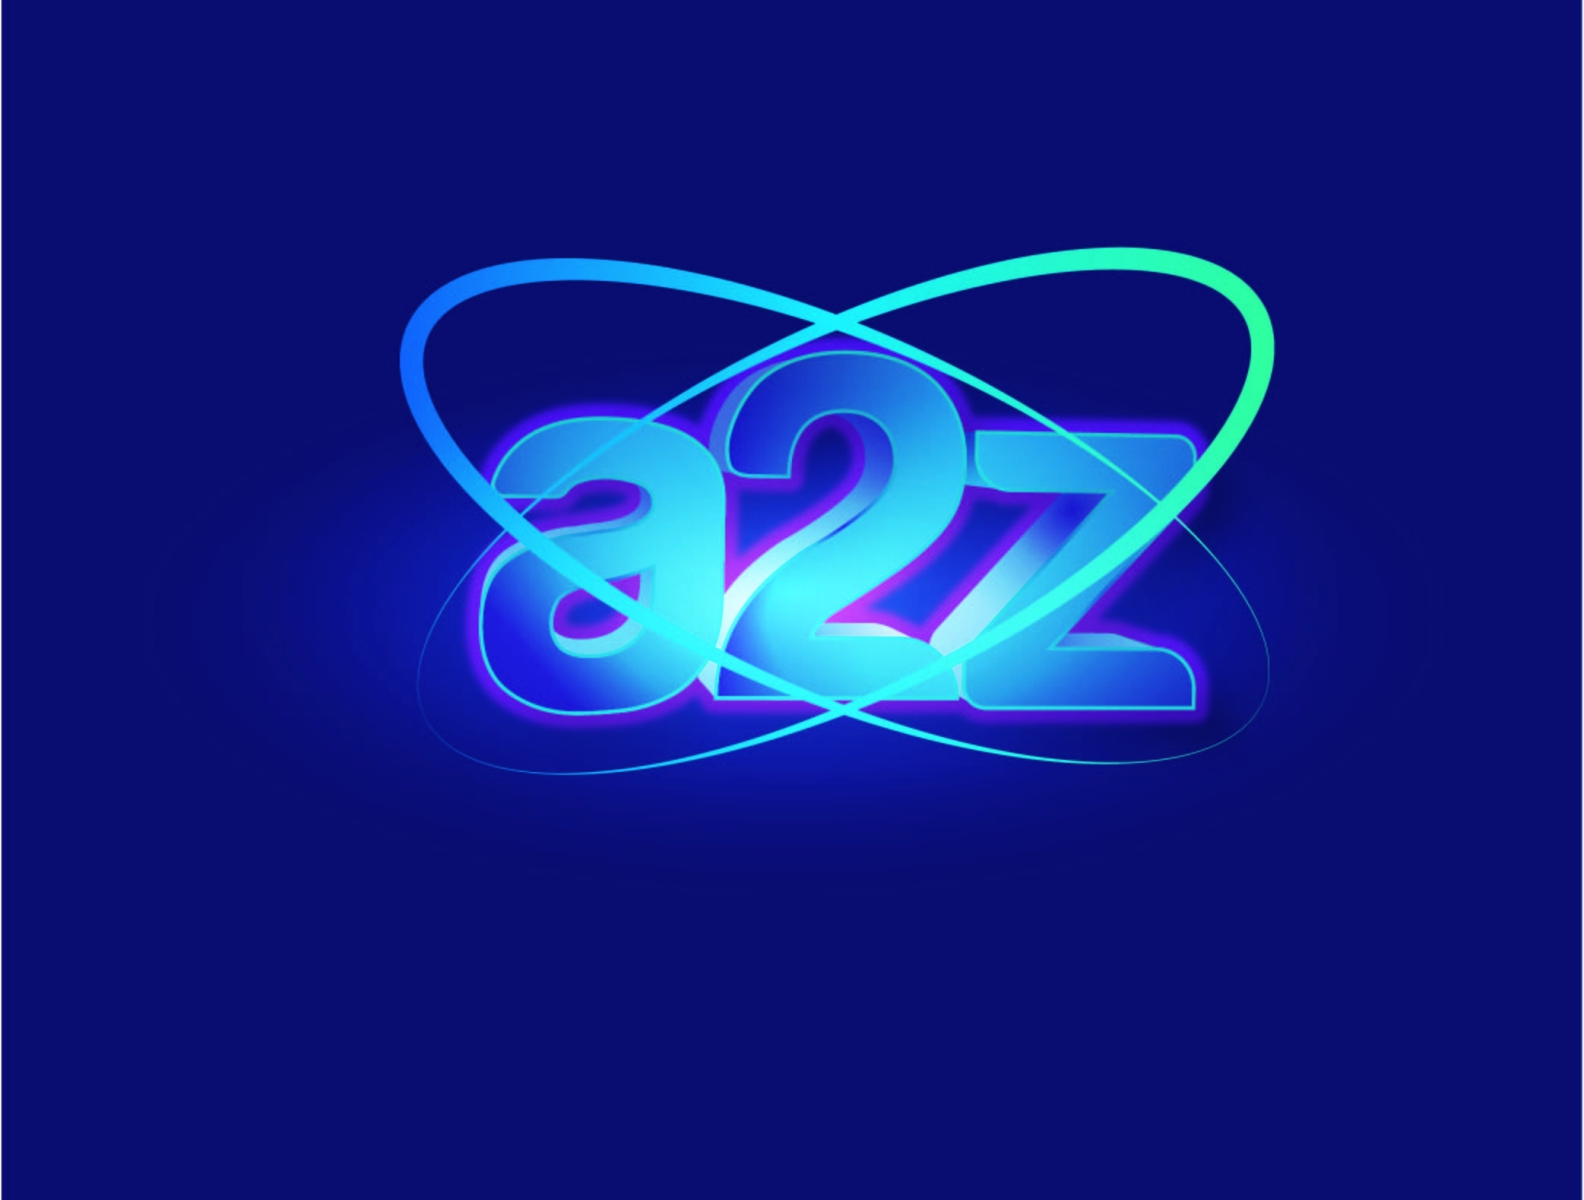 A to Z Letter logo design Adobe illustrator tutorial 2023 - YouTube